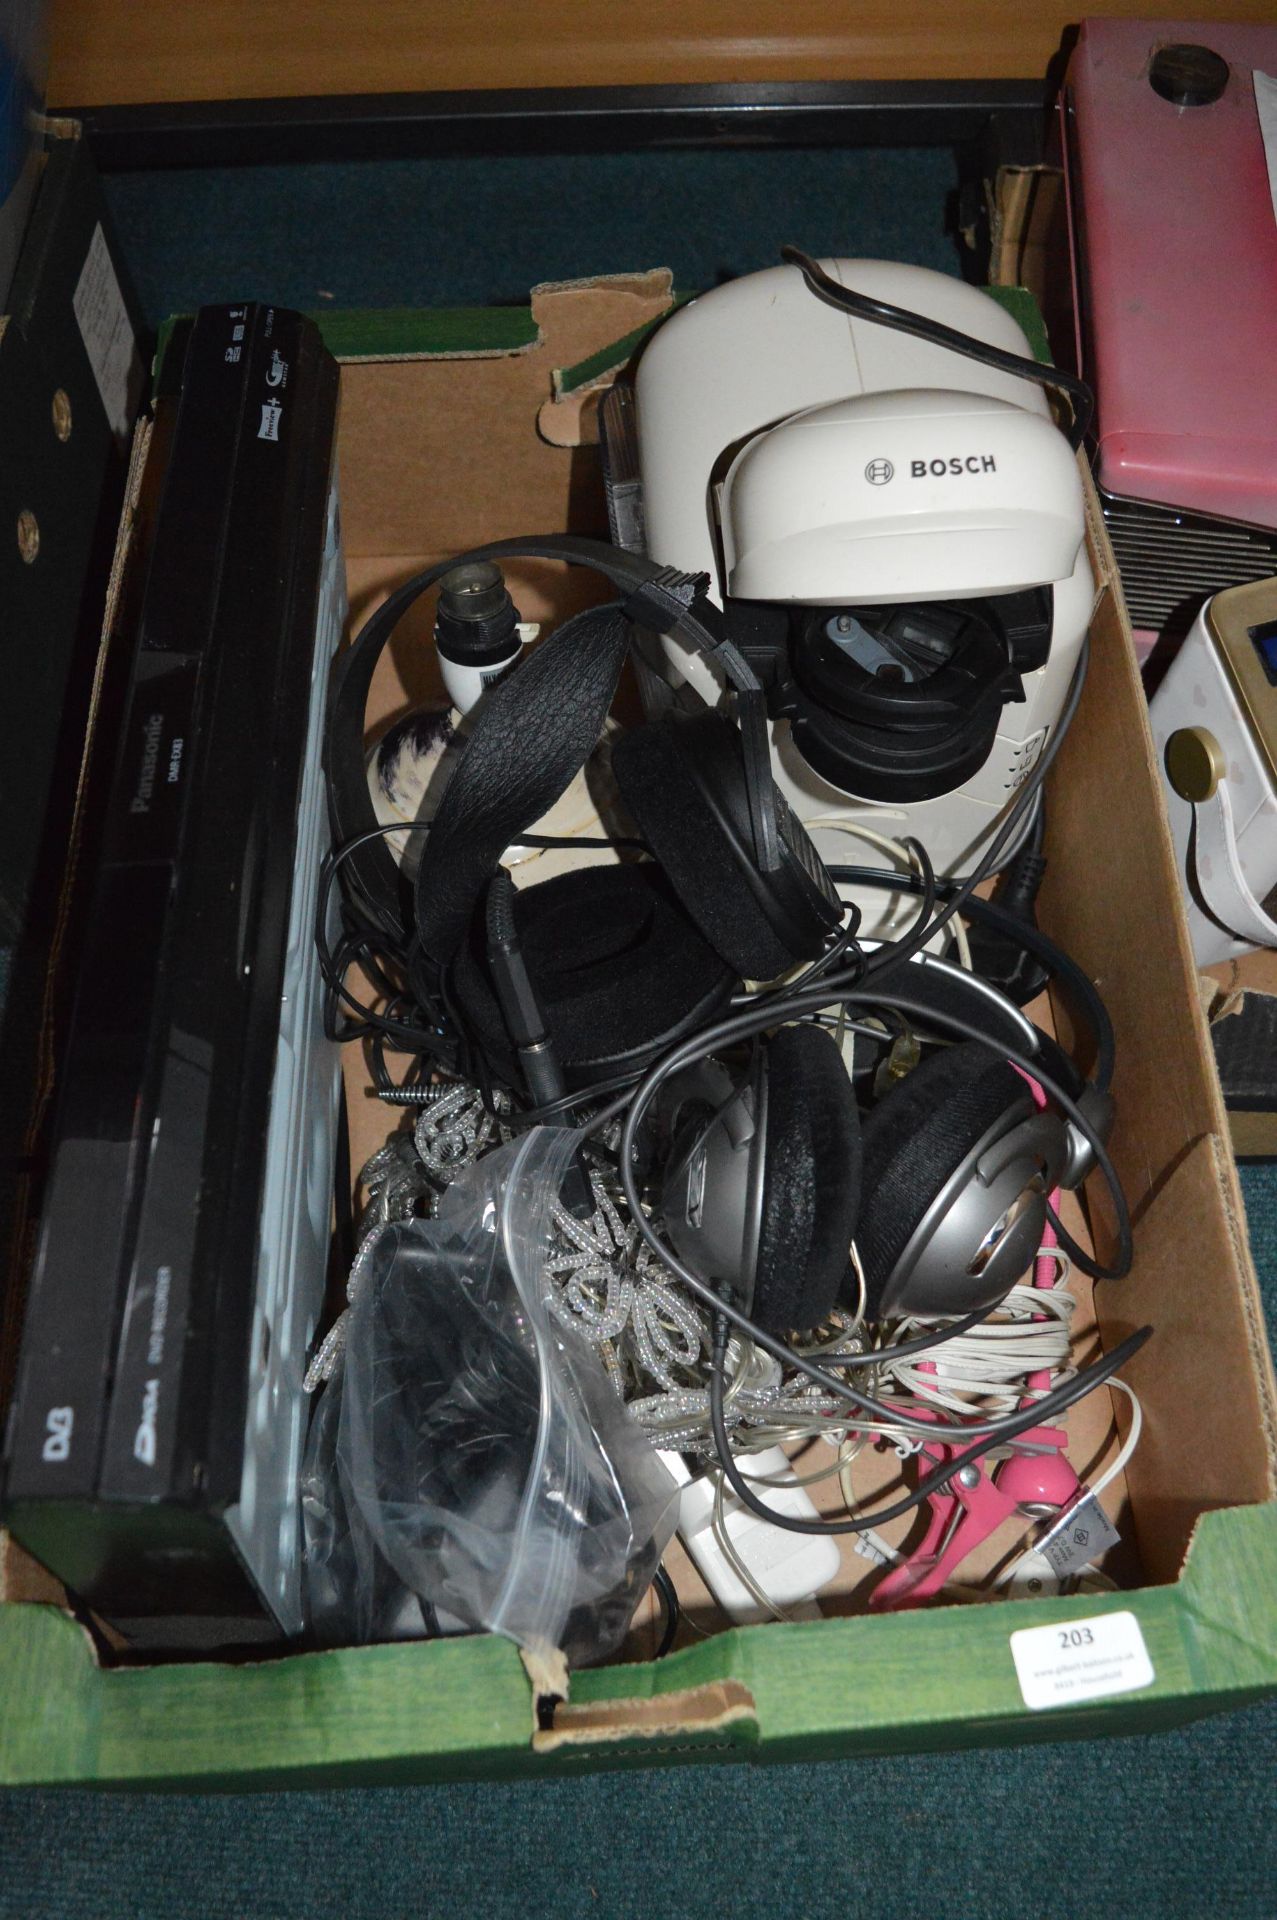 Electrical Items; Panasonic DVD Player, Headphones